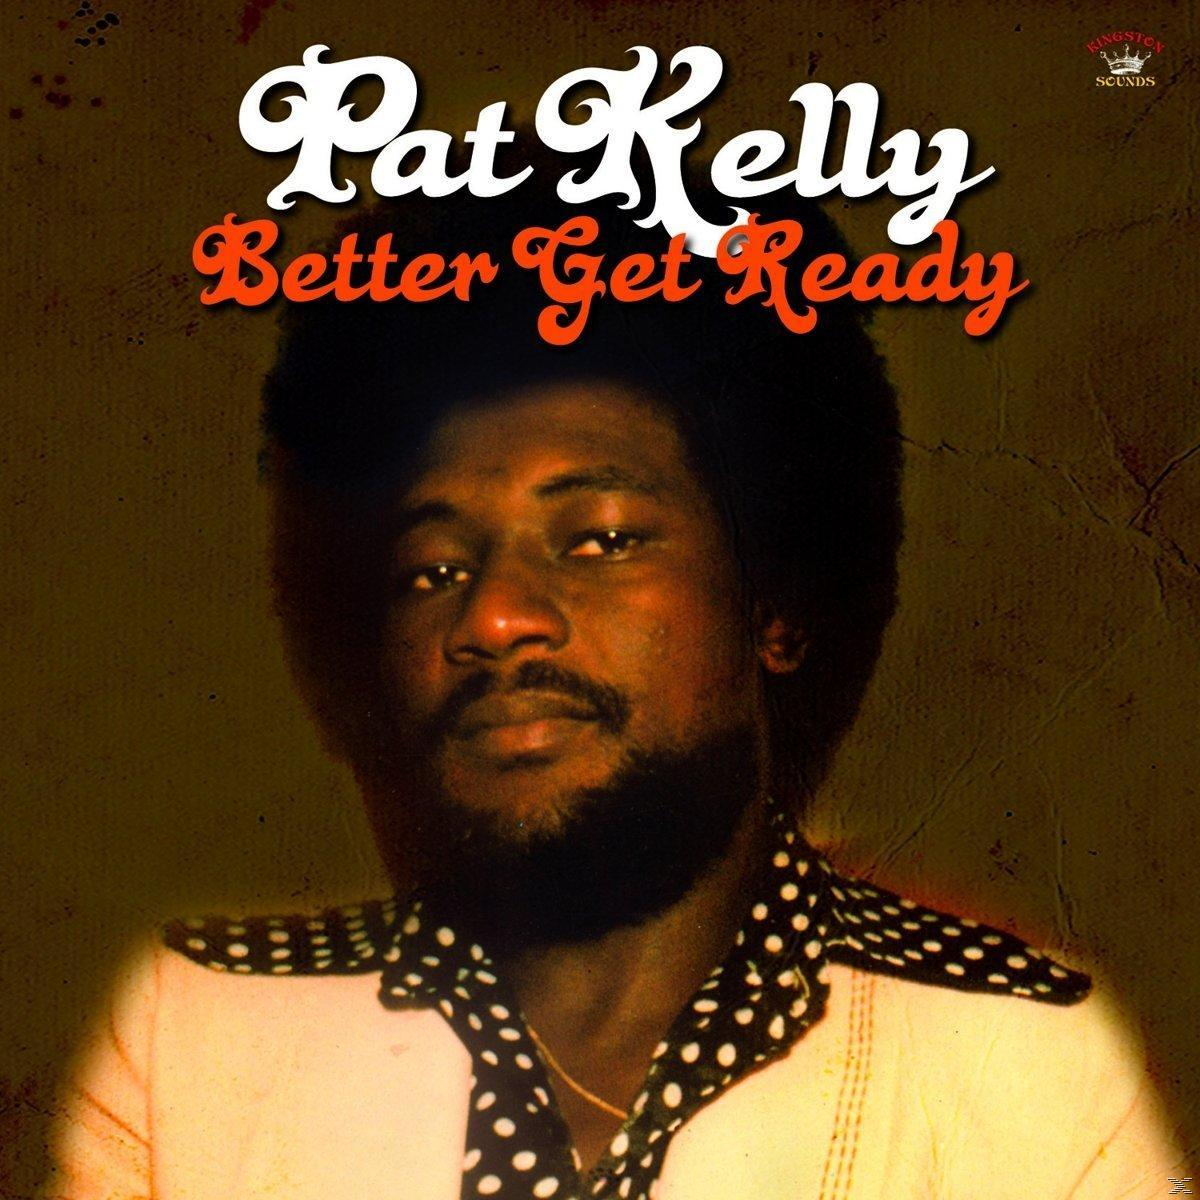 Pat Kelly - Better Get - Ready (Vinyl)